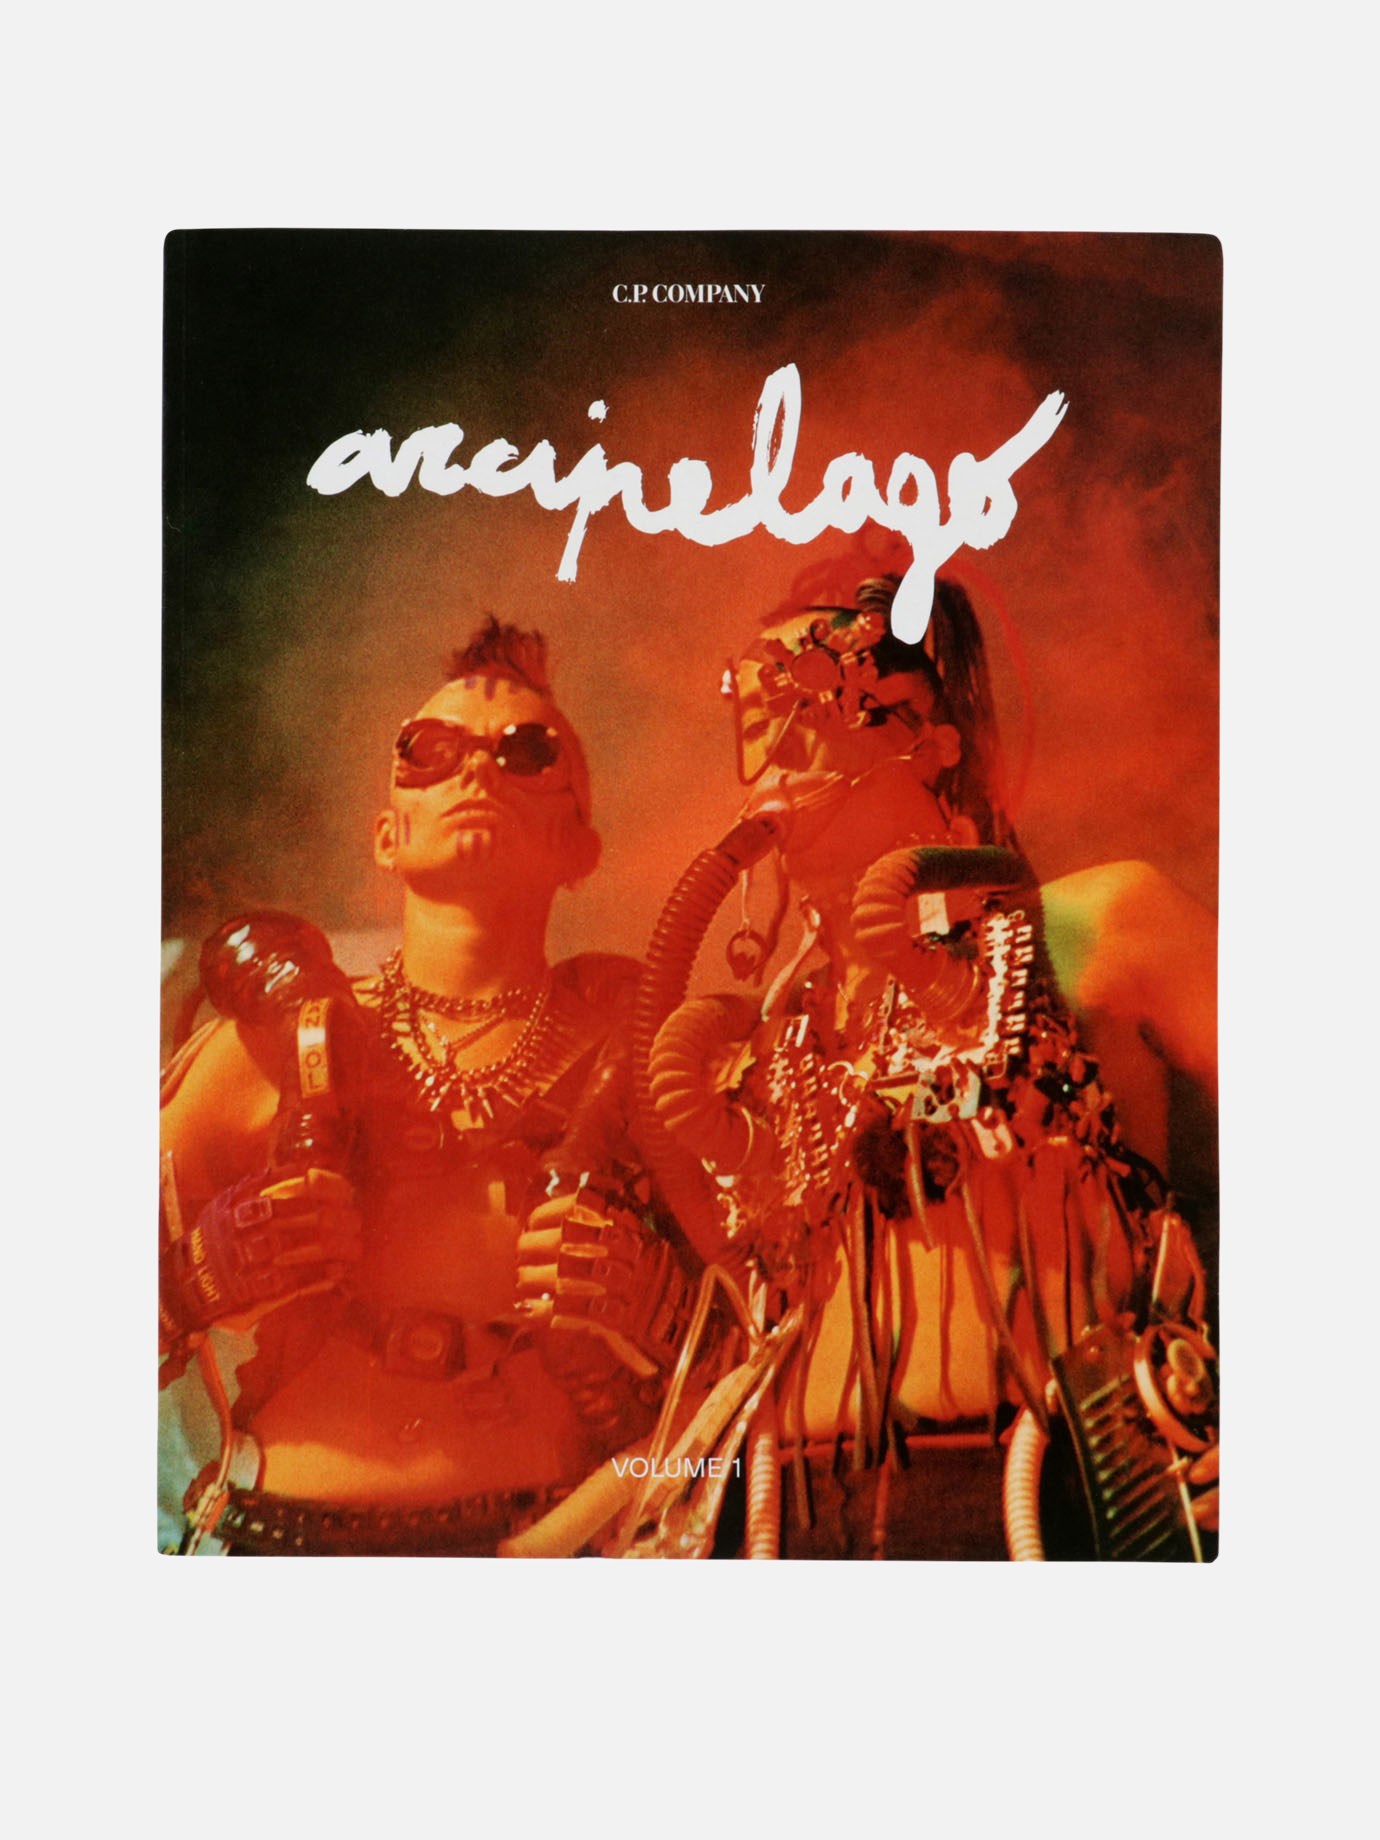  Arcipelago by C.P. Company - Issue 01  magazineby Arcipelago - 4